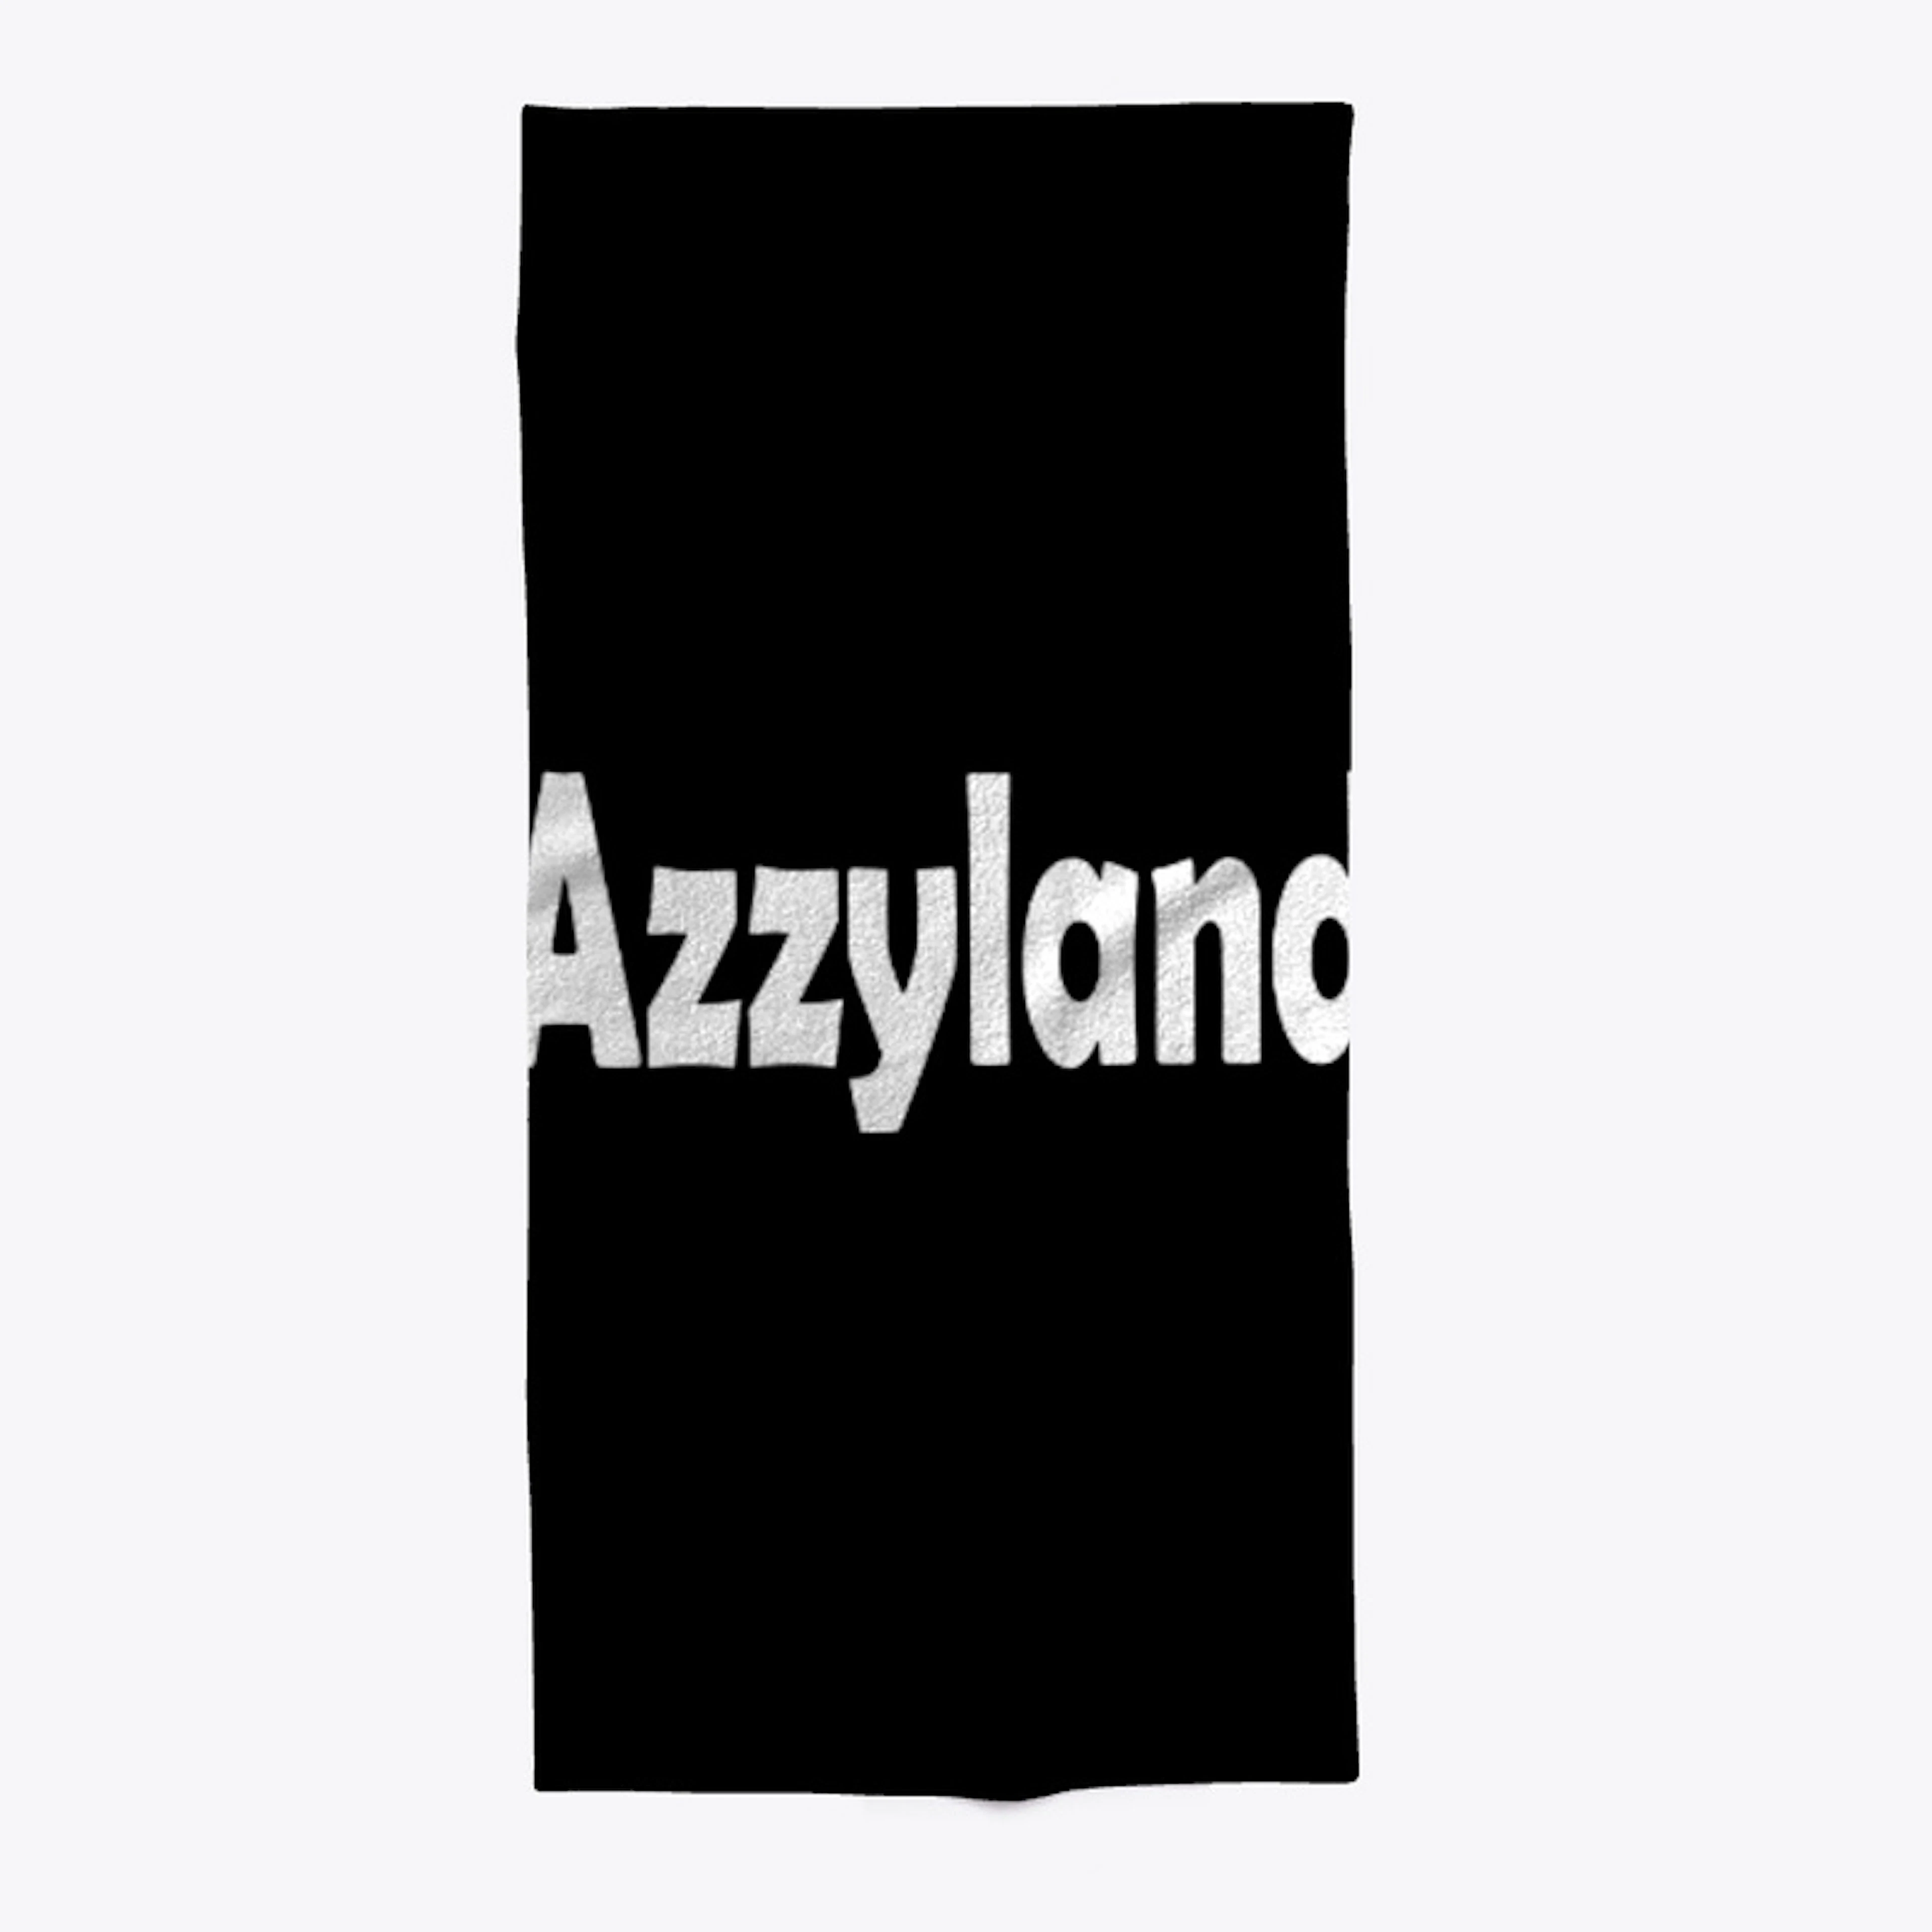 Azzyland Merch Logo